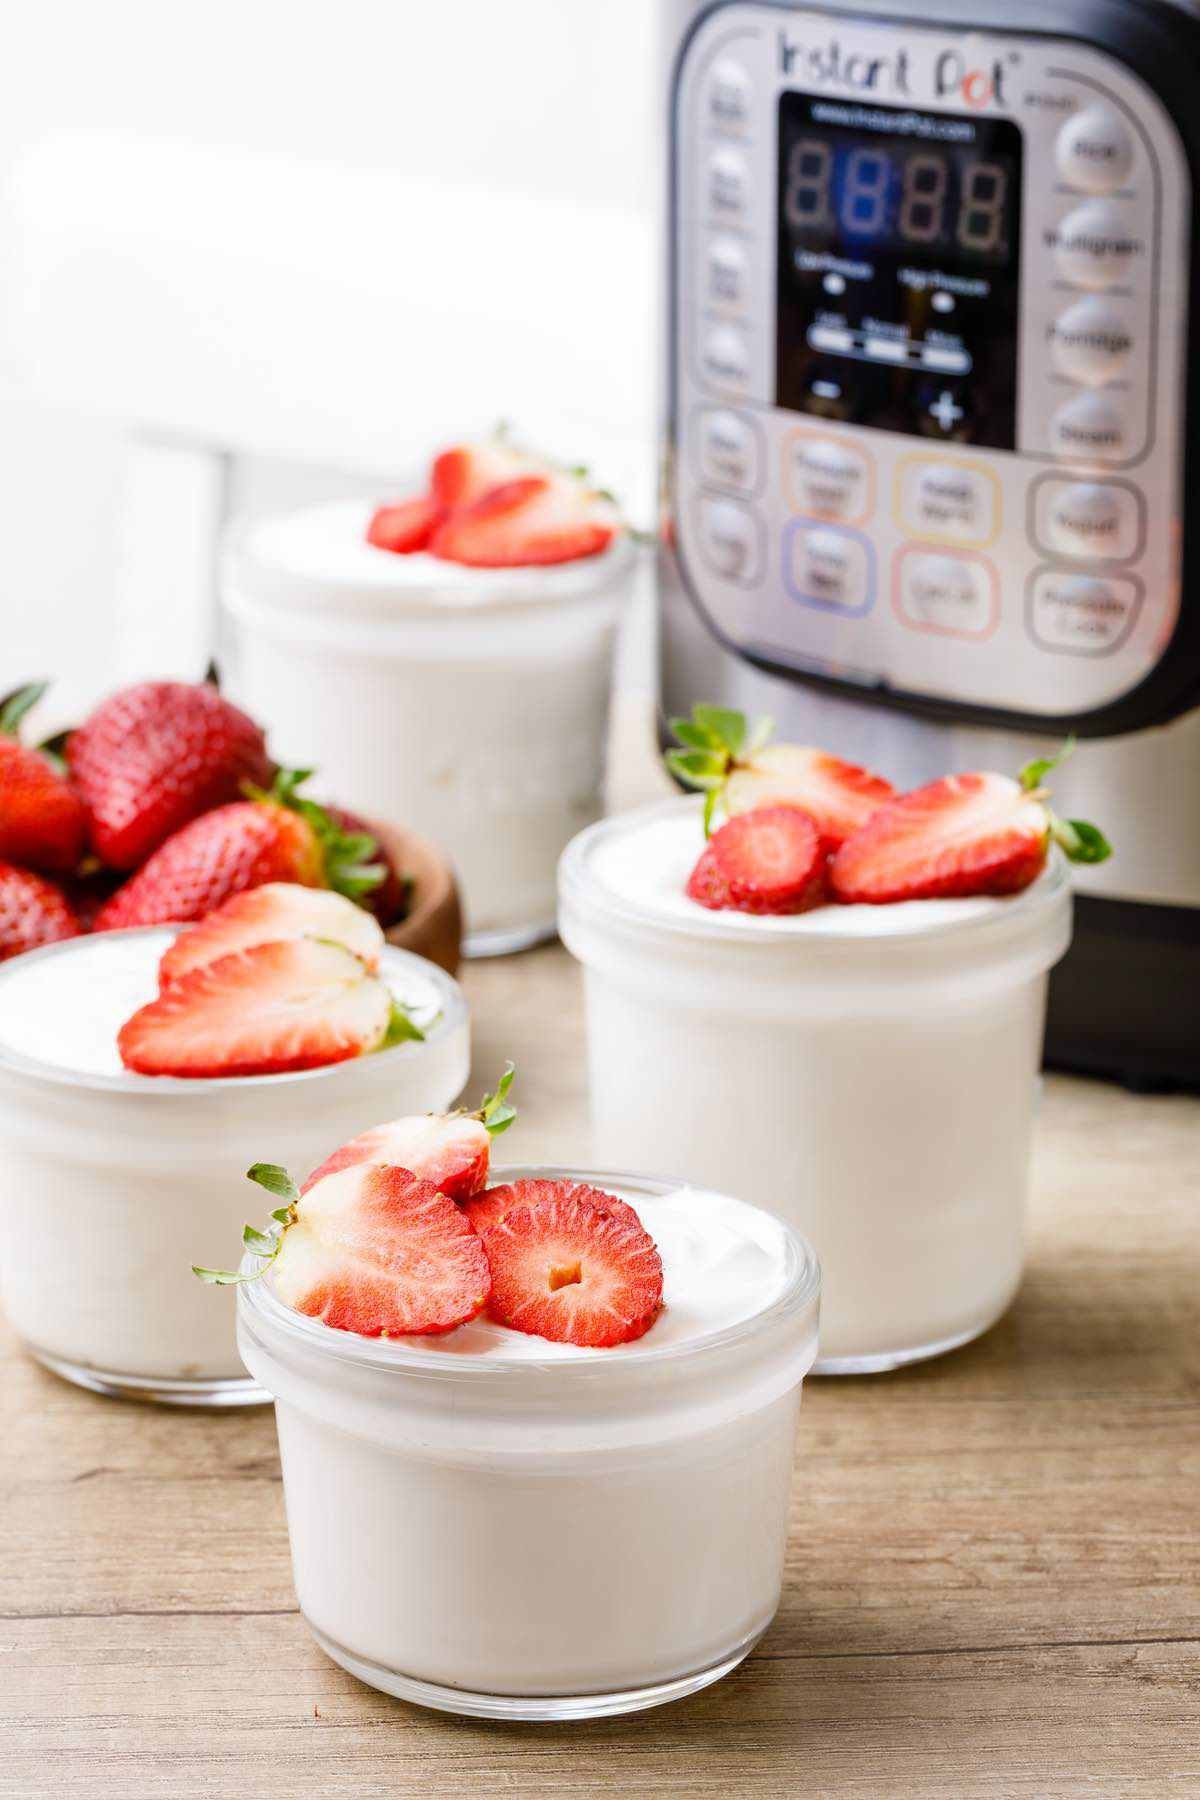 Instapot Keto Yogurt Recipes
 How to Make the Best Instant Pot Keto Yogurt The Easy Way